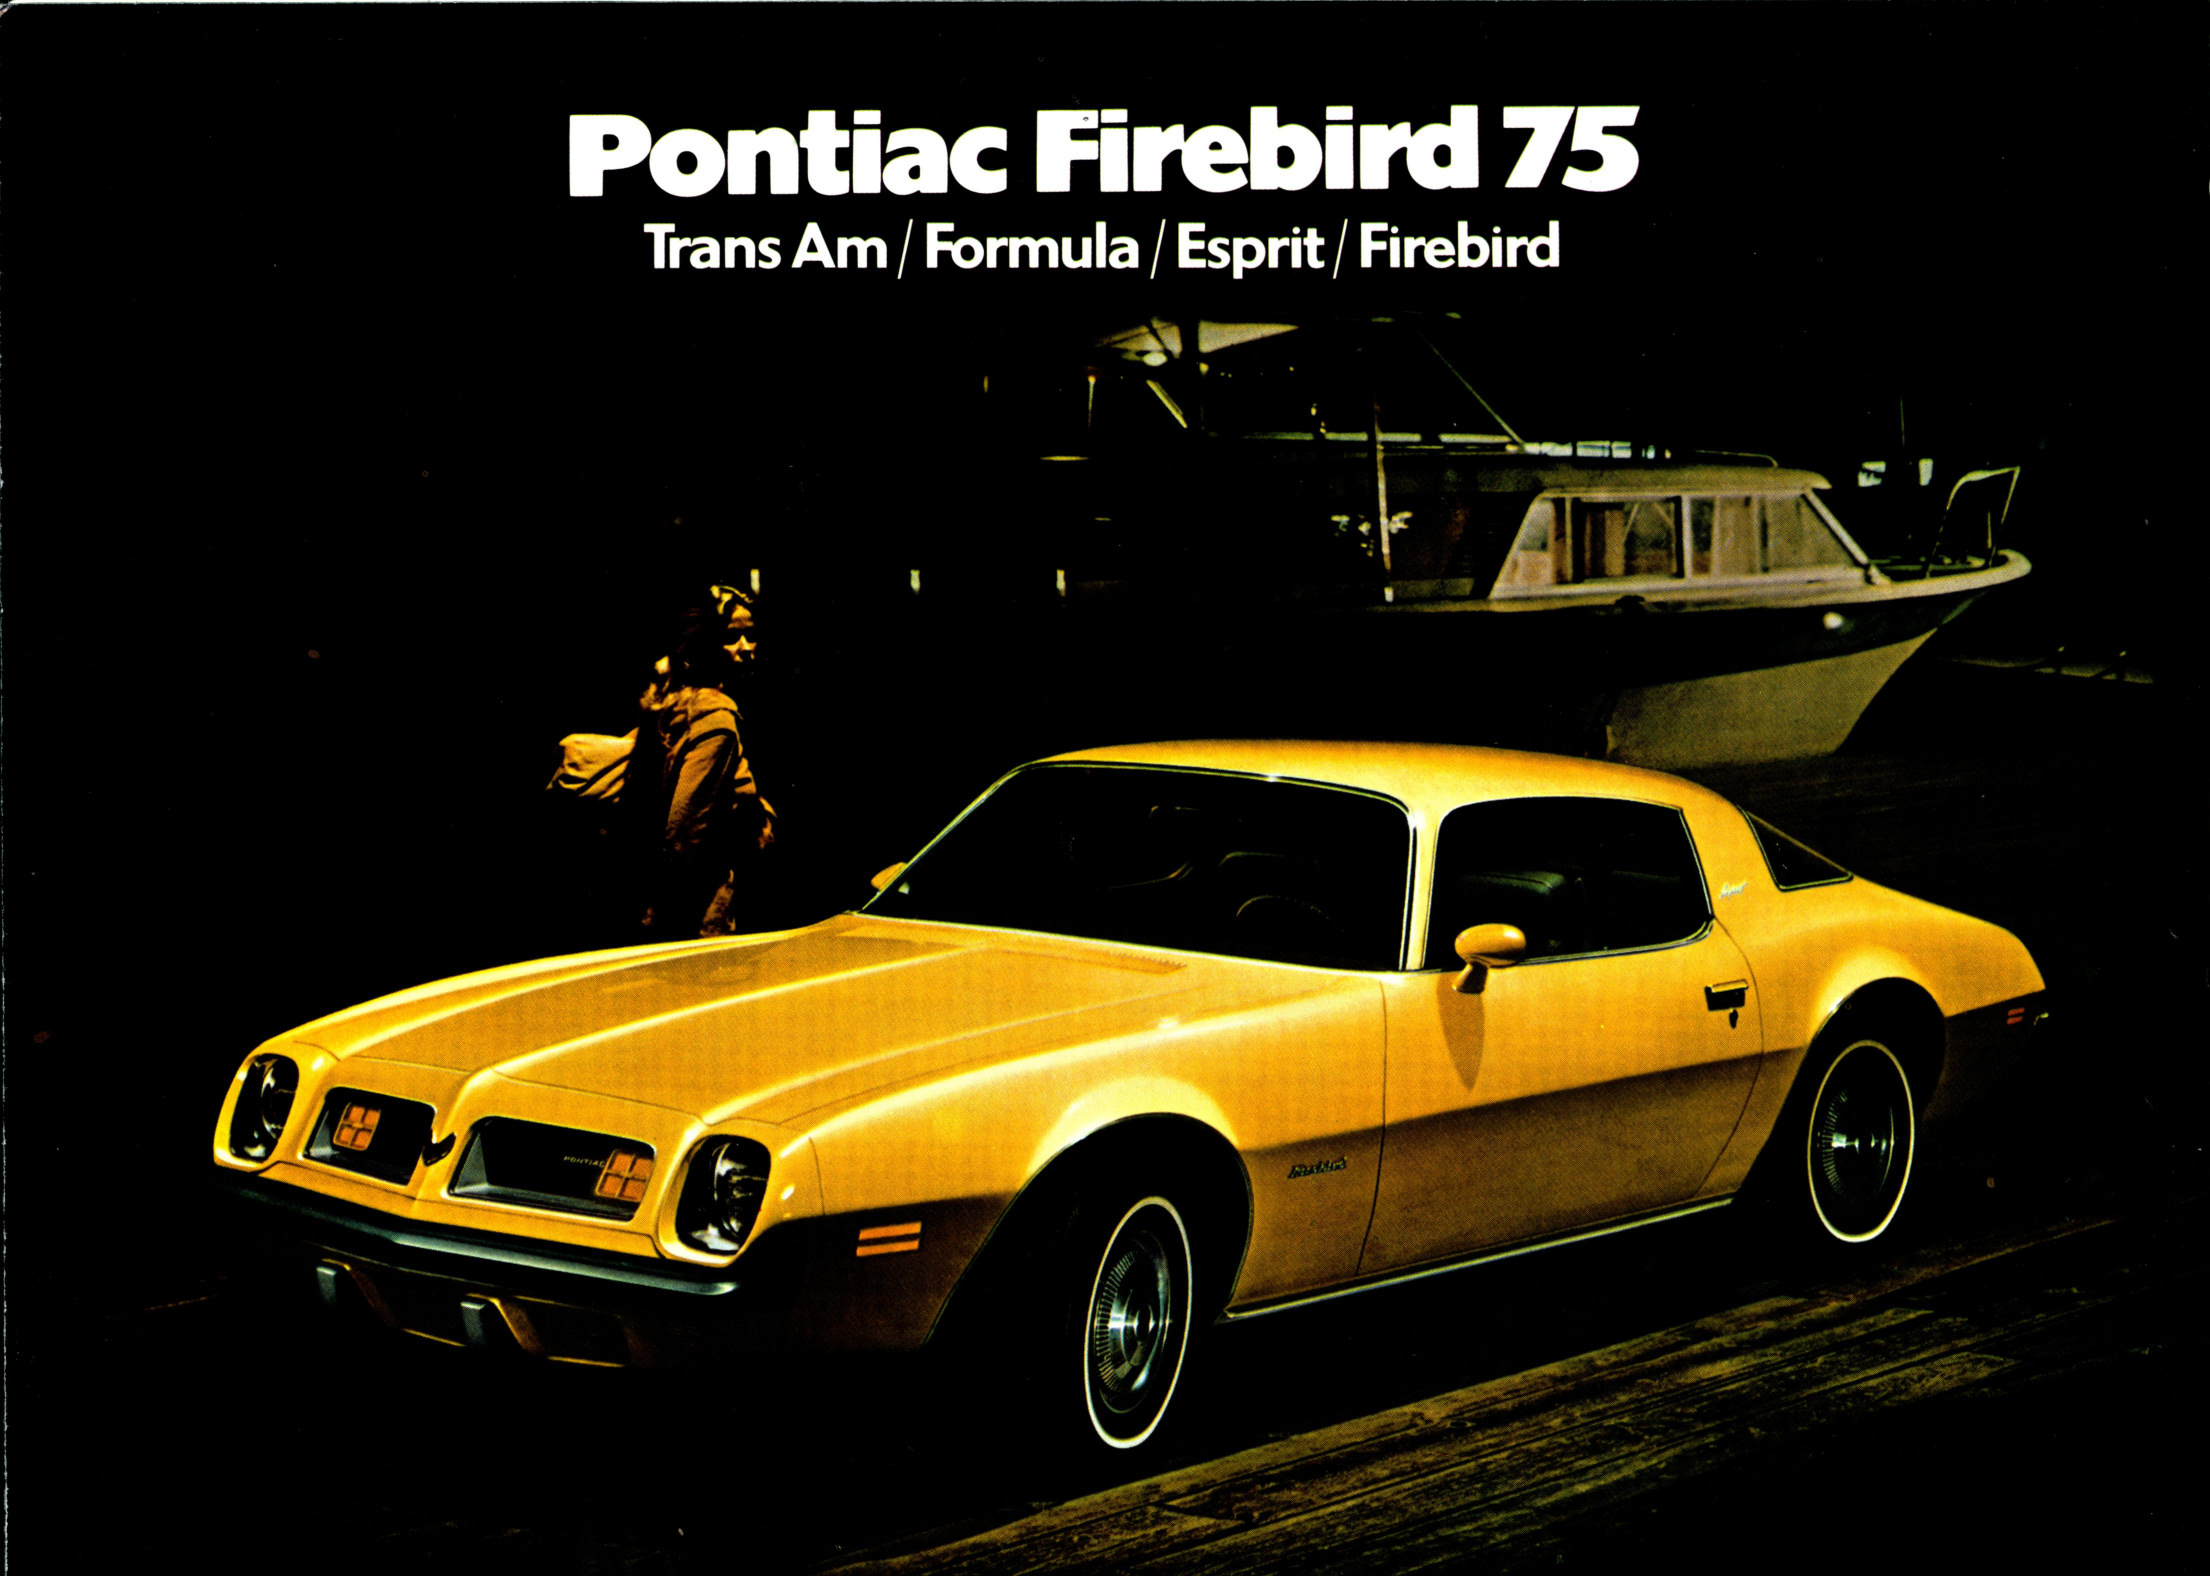 1975 Pontiac Firebird LeMans Grand Prix Bonneville FL Accessories Sales Brochure 